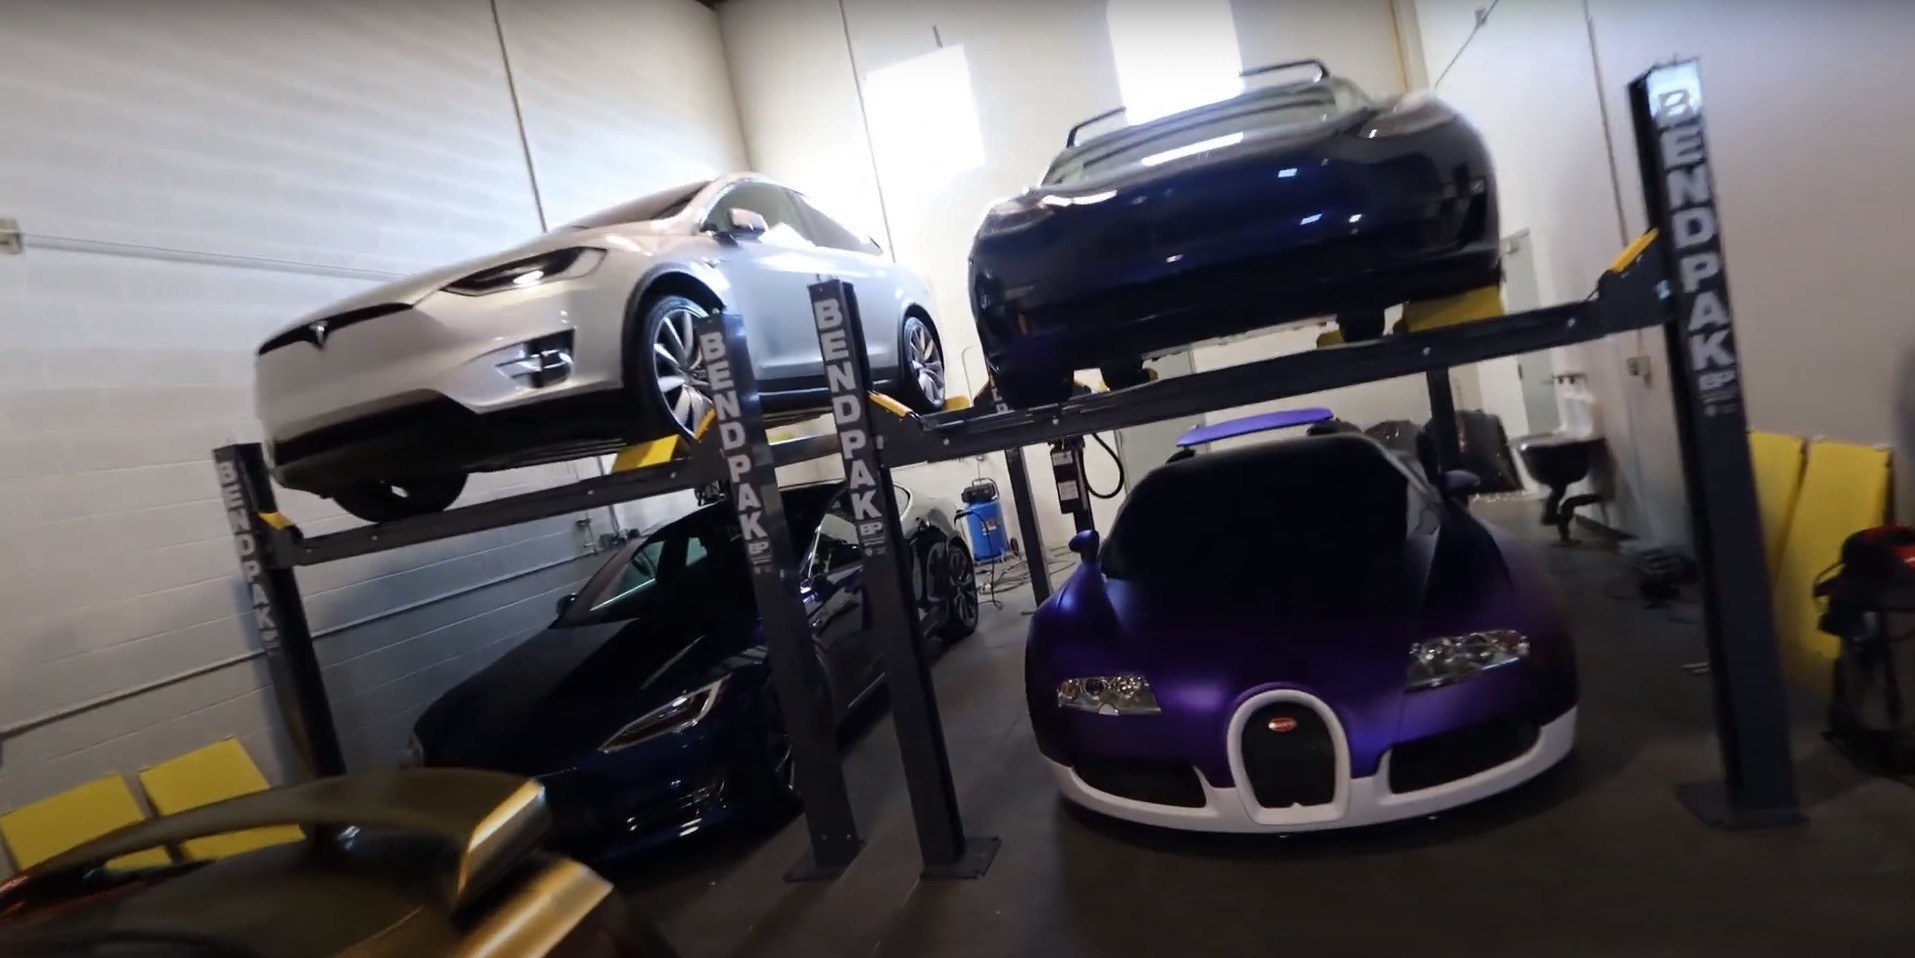 bugatti veyron vs tesla model s tesla